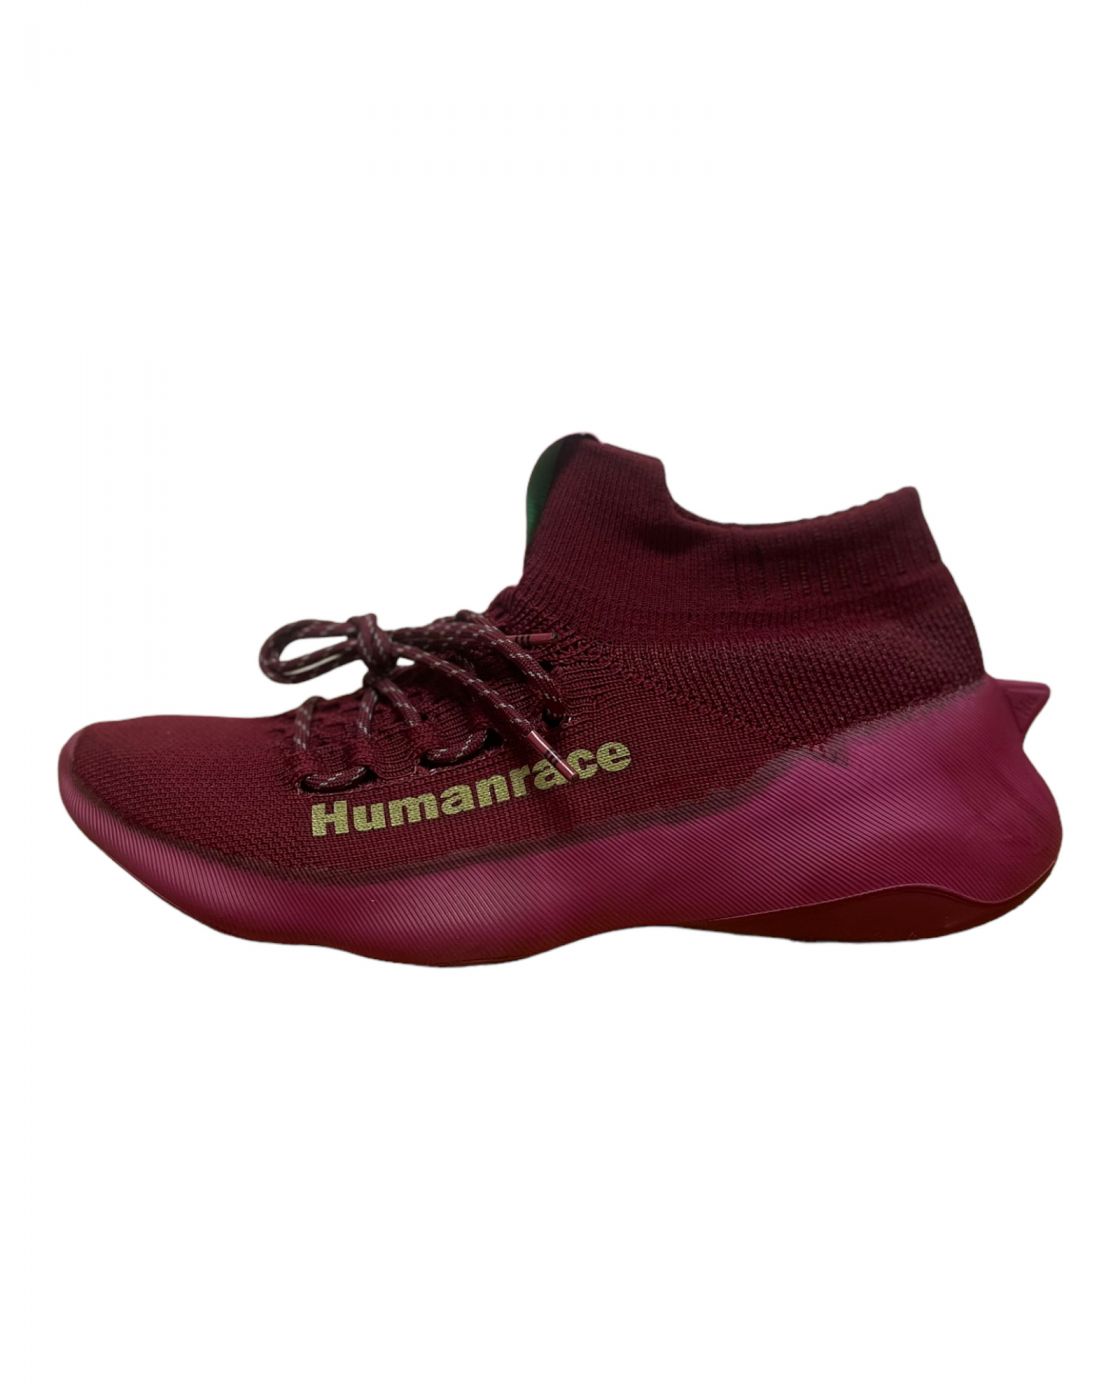 Adidas x Pharrell Williams Humanrace Sichona Burgundy 10.5 ADIDAS-240662